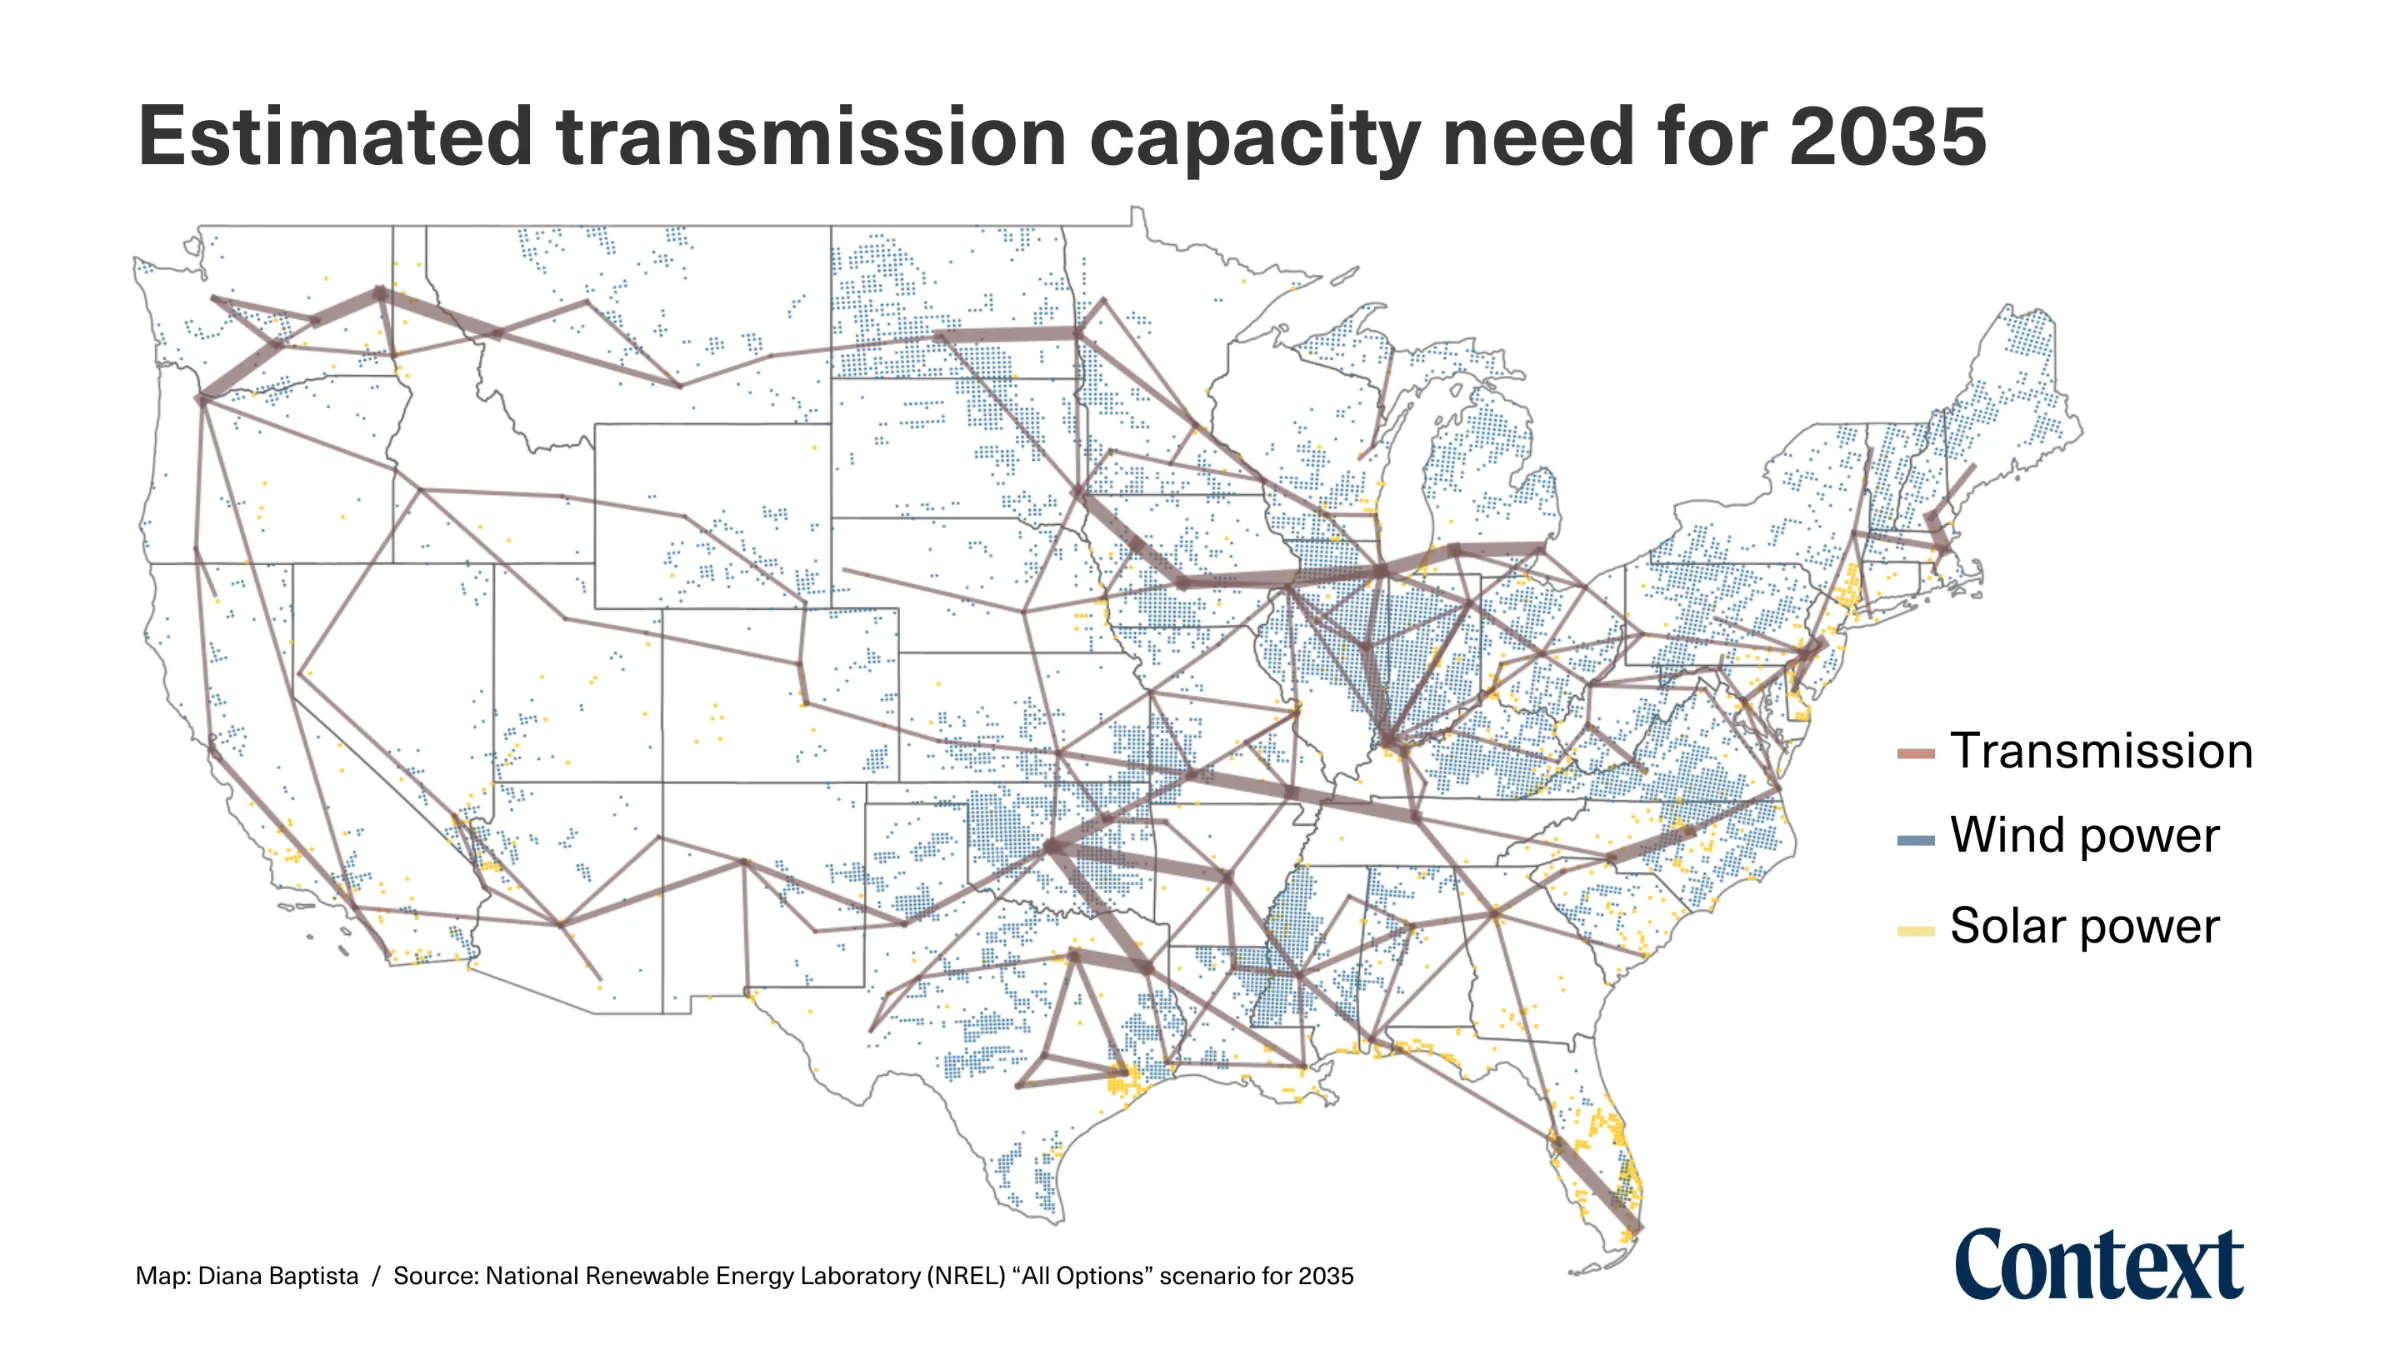 Current transmission capacity (2035). Source: National Renewable Energy Laboratory (NREL) 'NoCCS' scenario for 2035